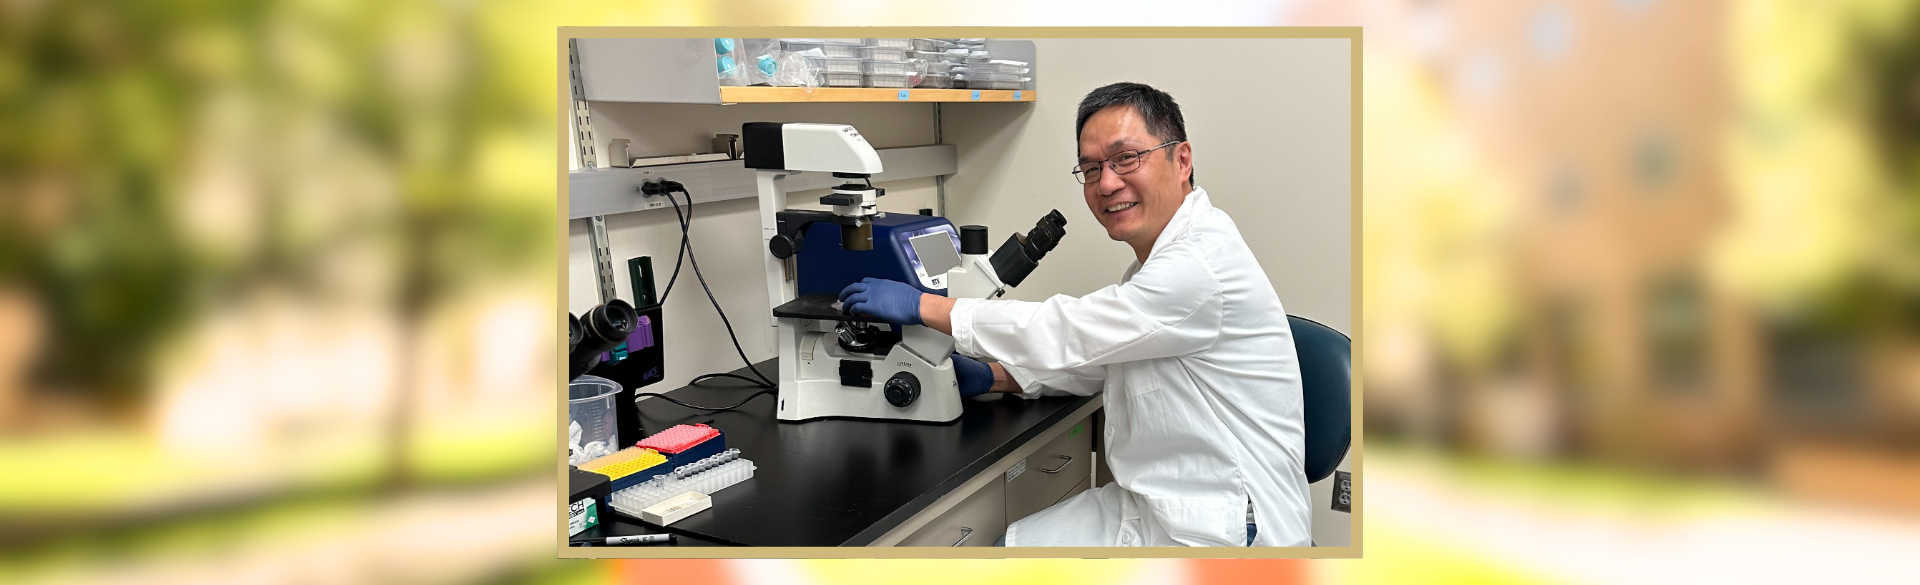 Yuwen Zhu in the lab | University of Colorado Cancer Center